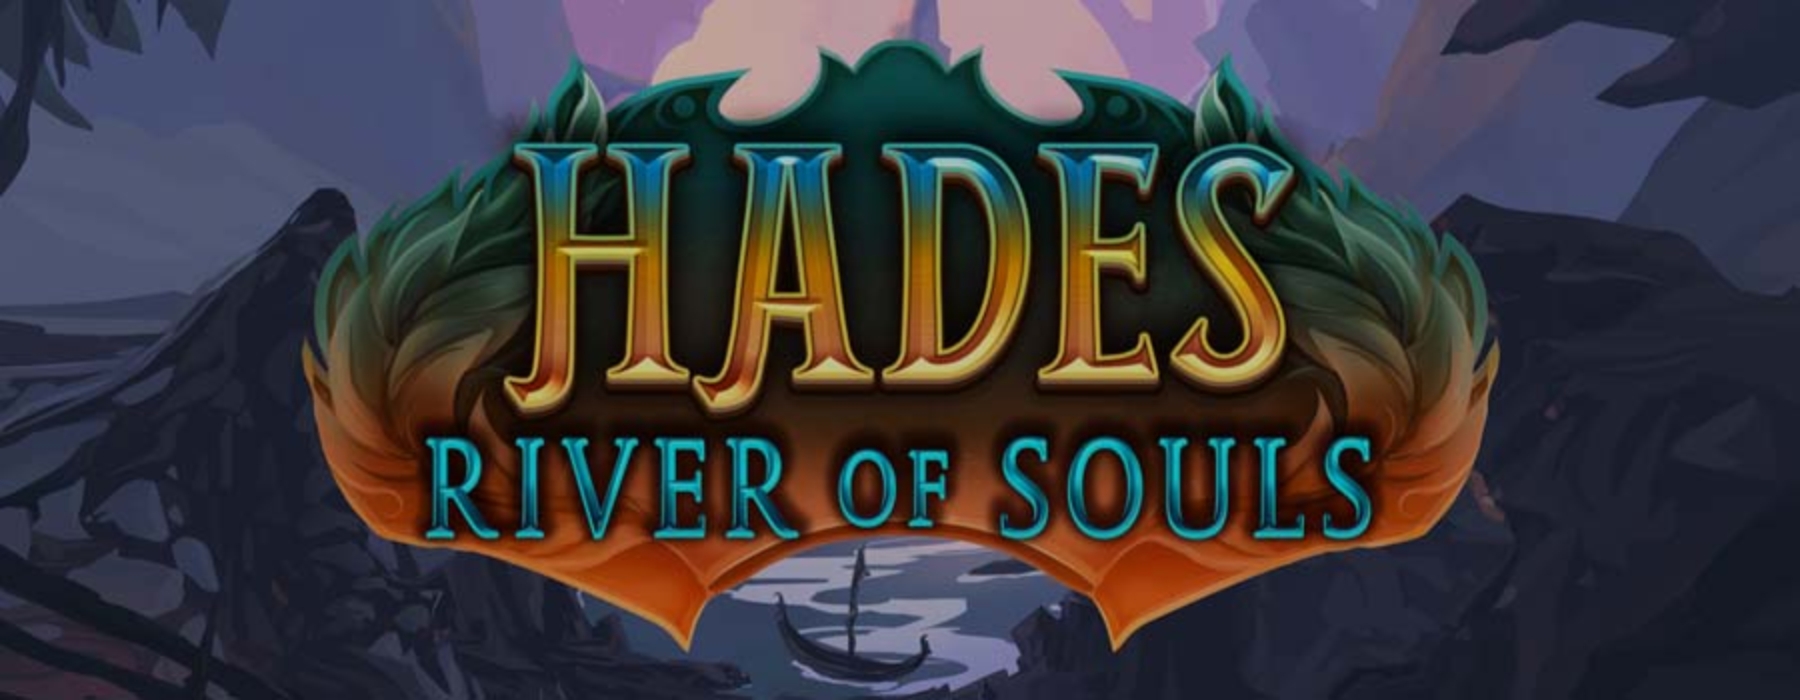 Hades River of Souls demo